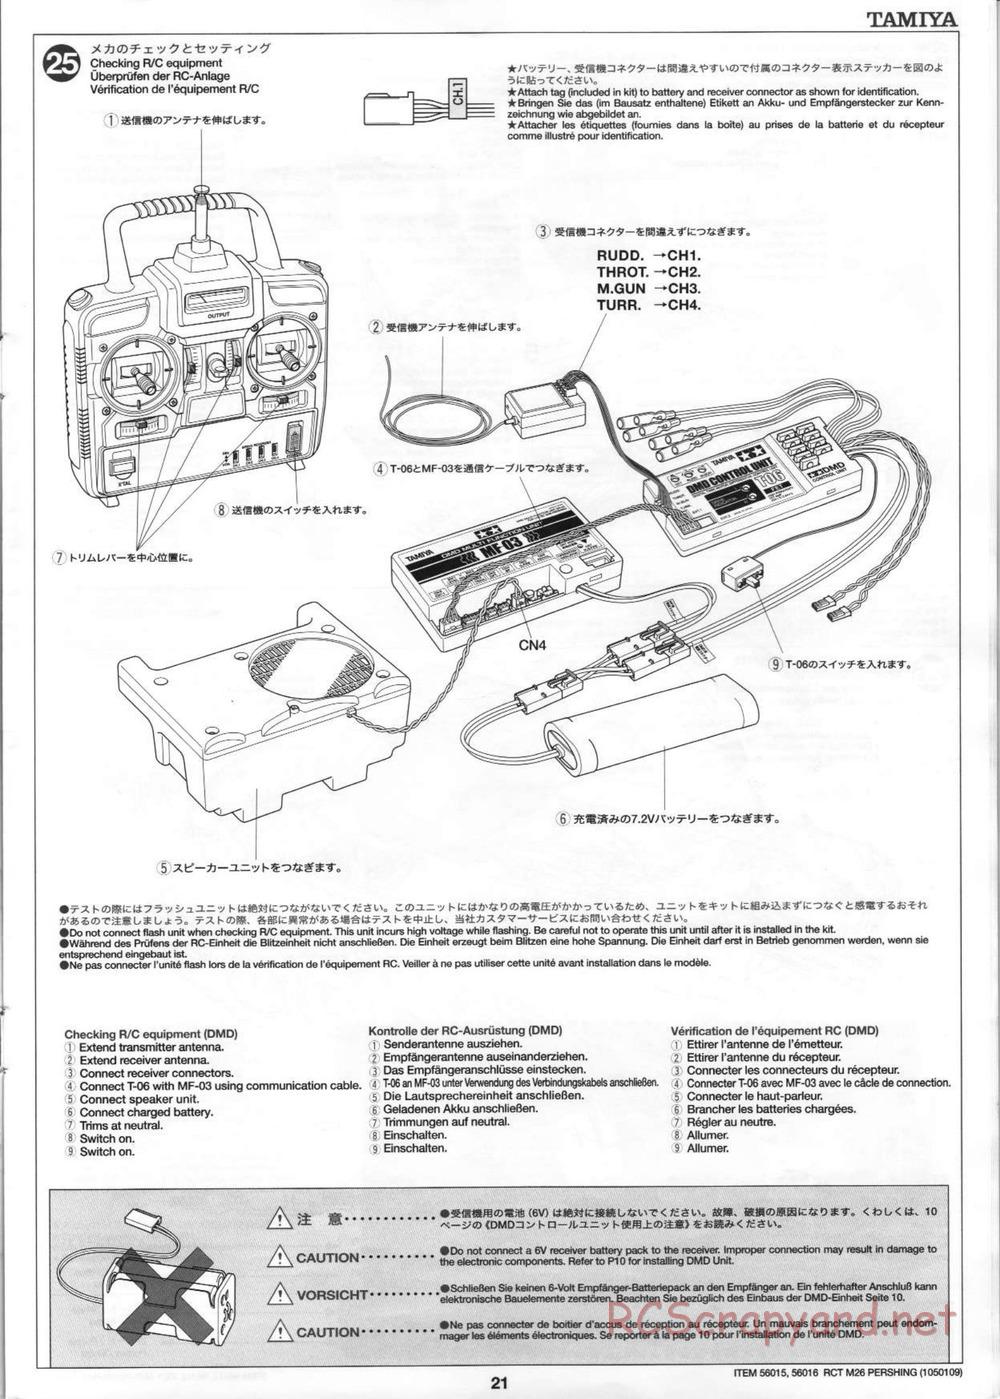 Tamiya - M26 Pershing - 1/16 Scale Chassis - Manual - Page 21